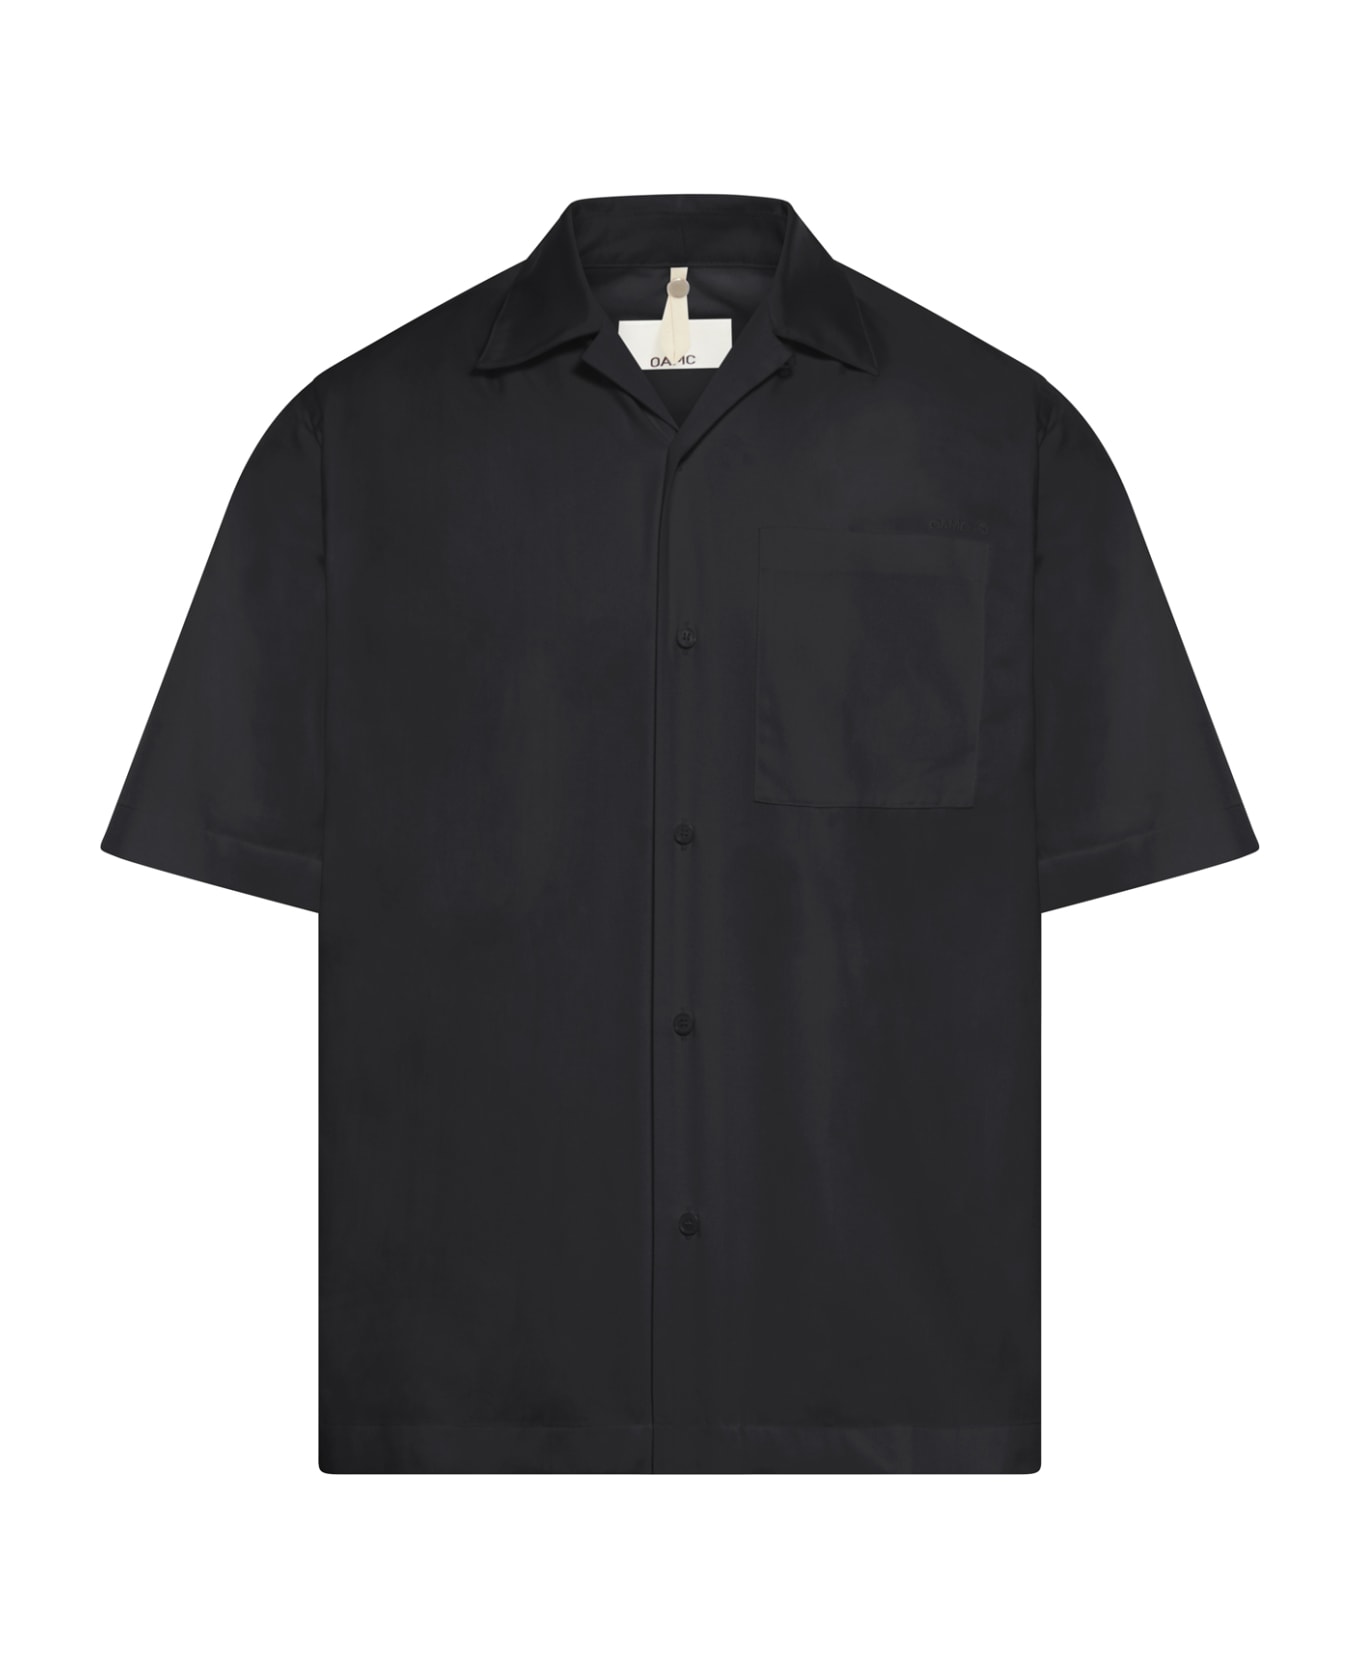 OAMC Kurt Shirt, Scribble Patch - Black シャツ